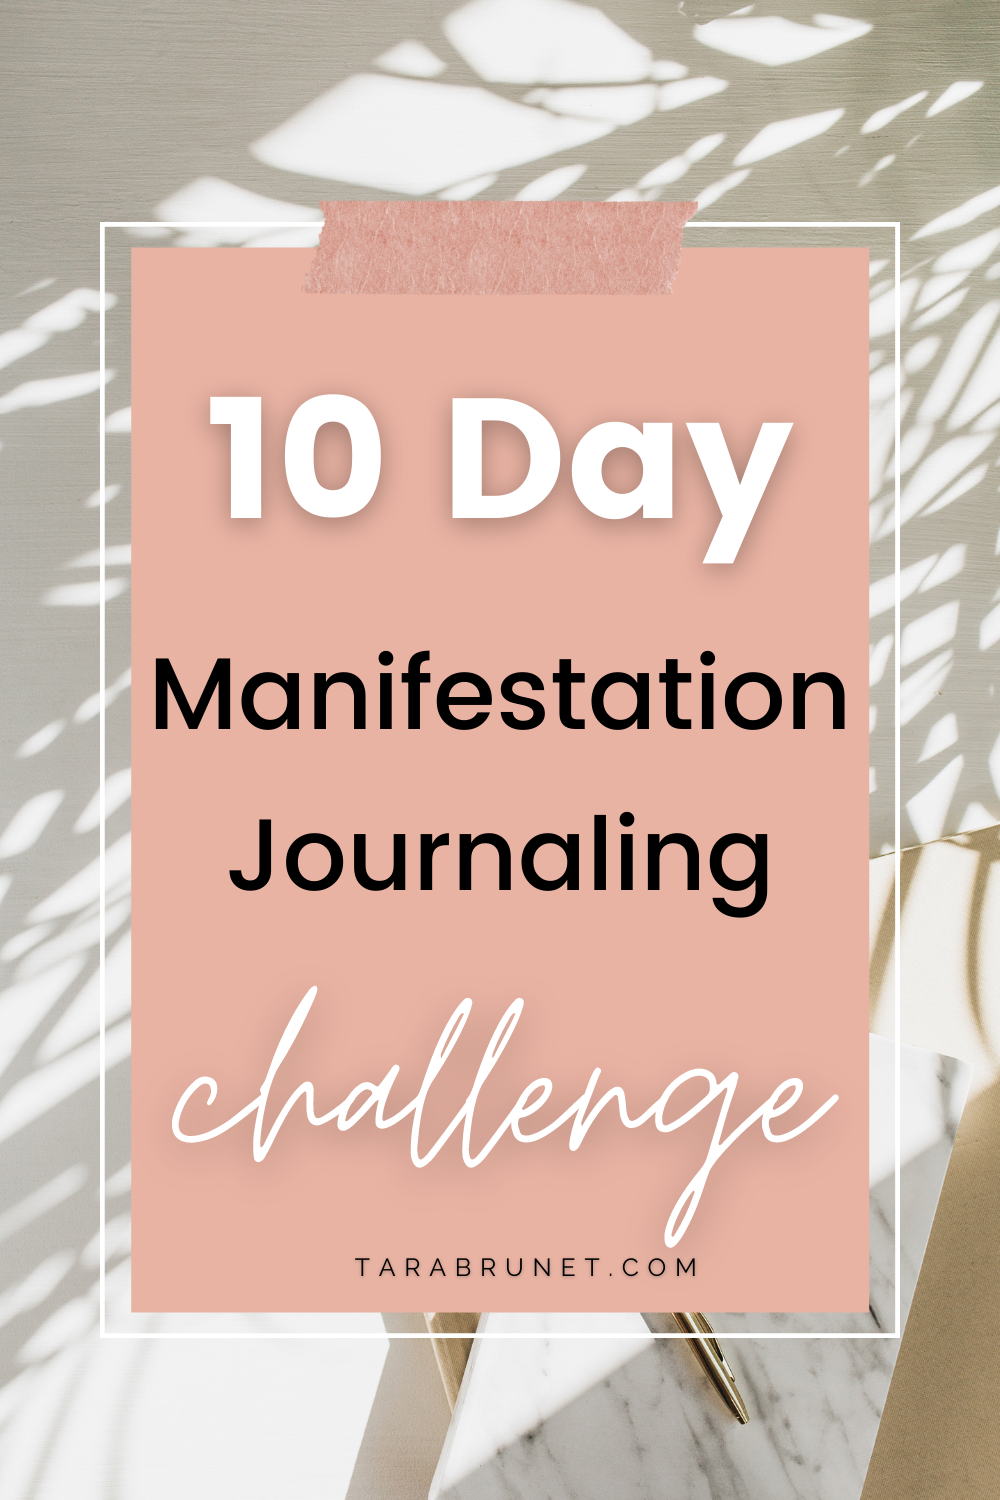 10 Day Manifestation Journaling Challenge.png